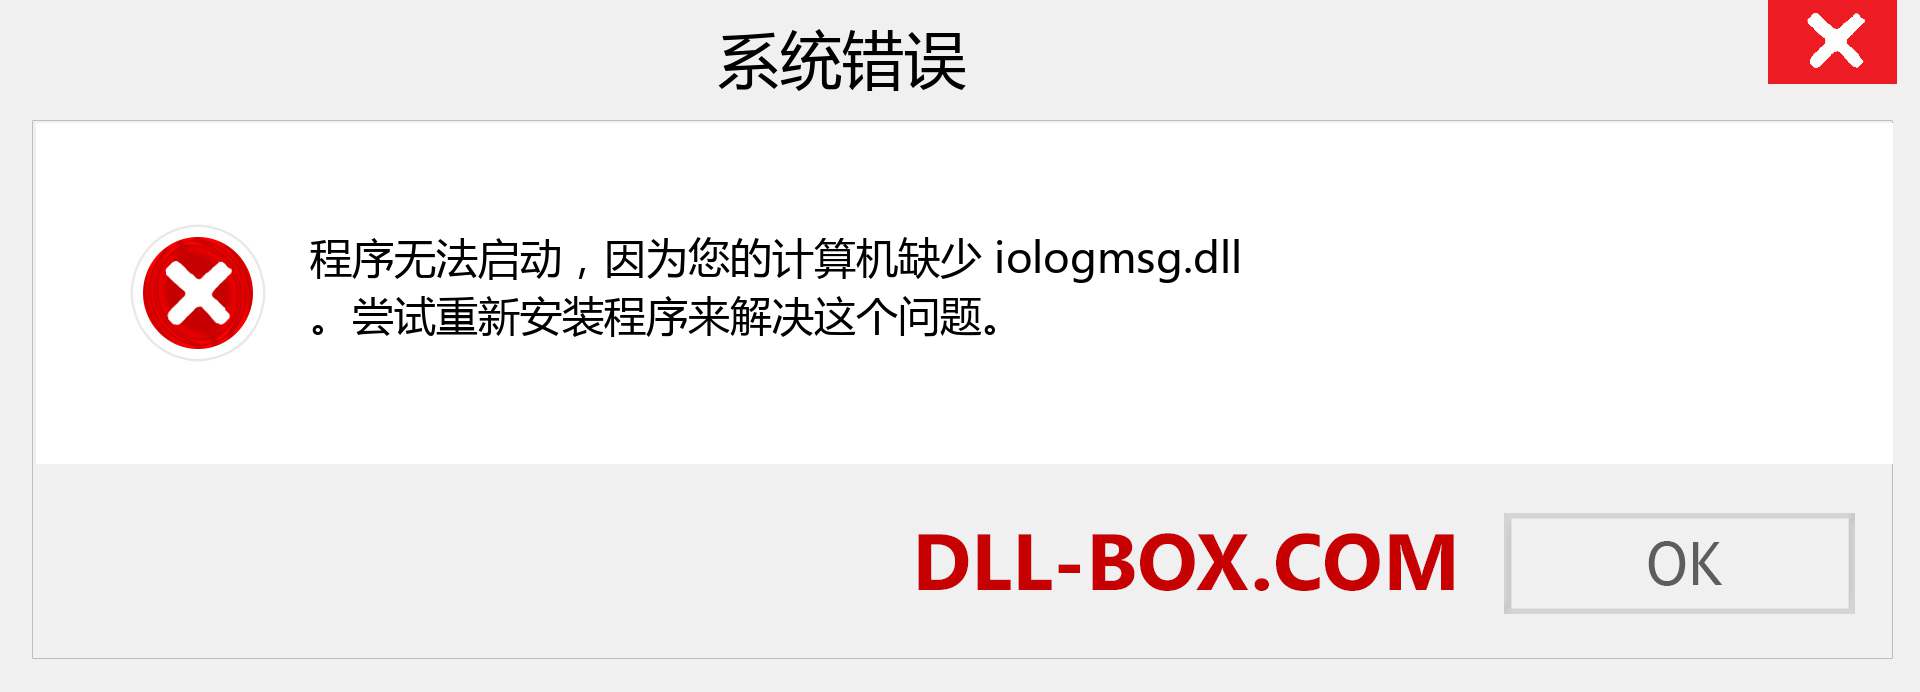 iologmsg.dll 文件丢失？。 适用于 Windows 7、8、10 的下载 - 修复 Windows、照片、图像上的 iologmsg dll 丢失错误